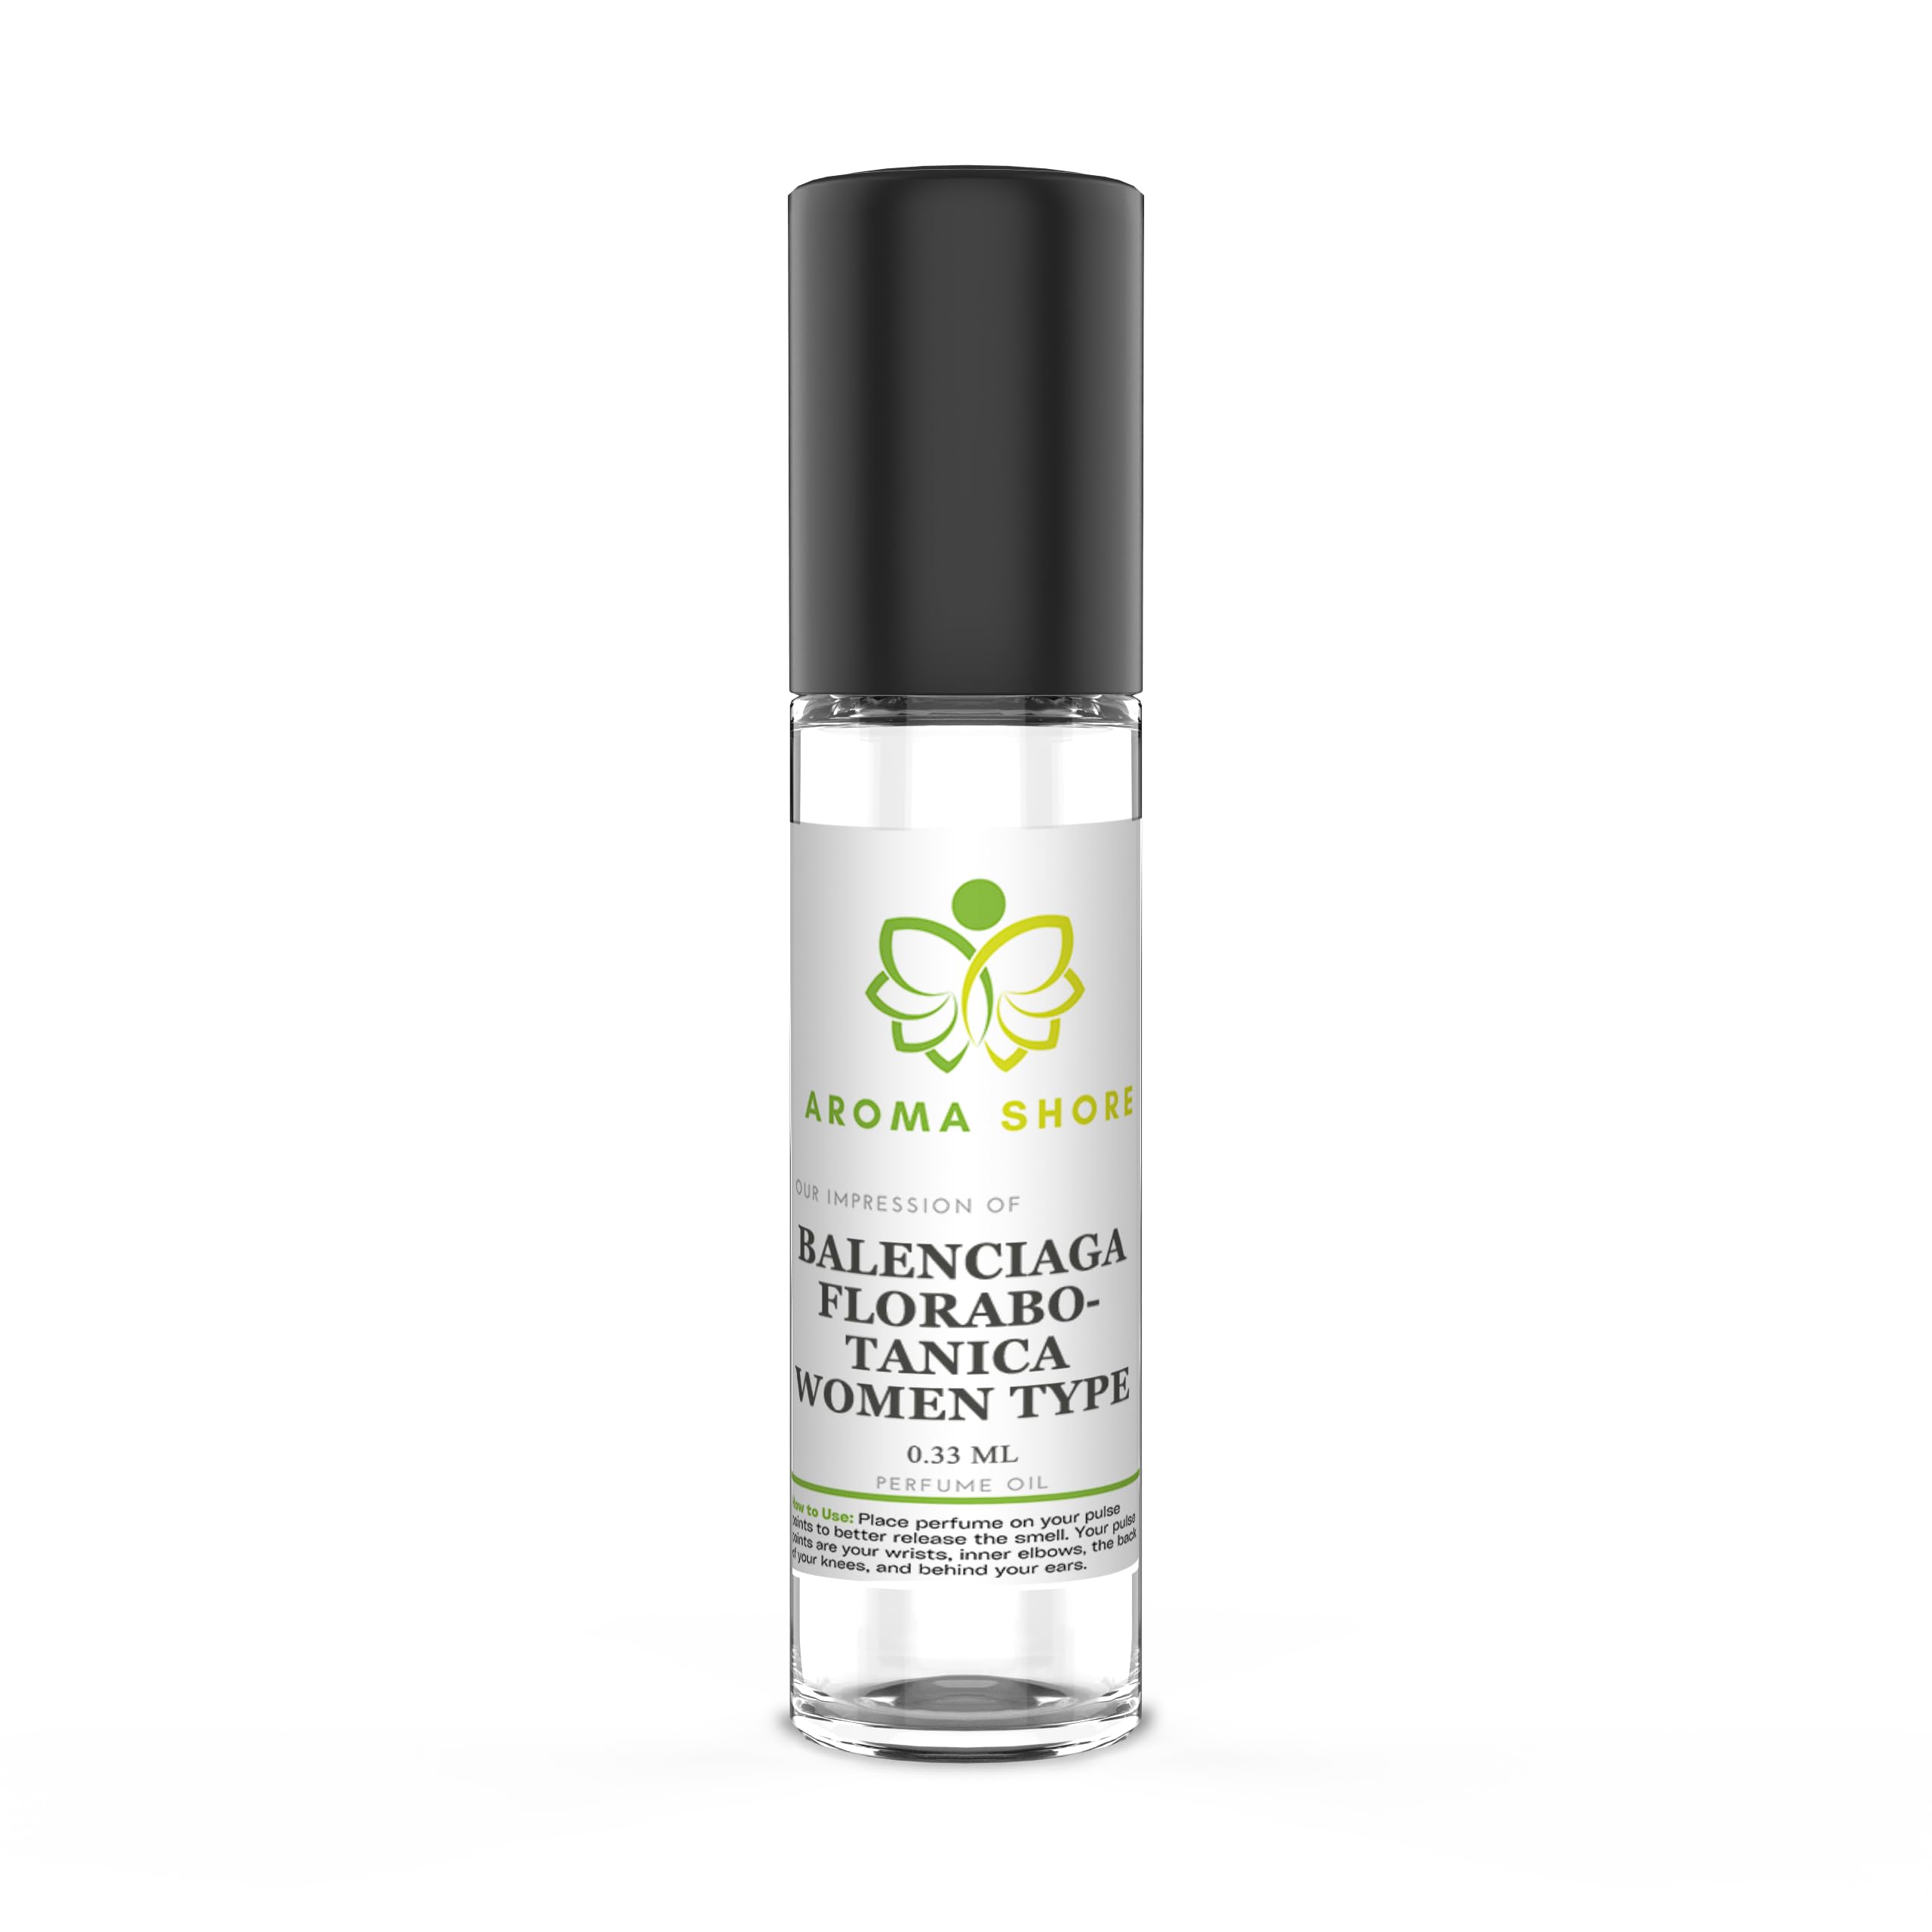 Aroma Shore Perfume Oil - Our Impression Of and compatible with B'Alenciaga Florabotanica Women Type, 100% Pure Uncut Body Oil Our Interpretation, Perfume Body Oil